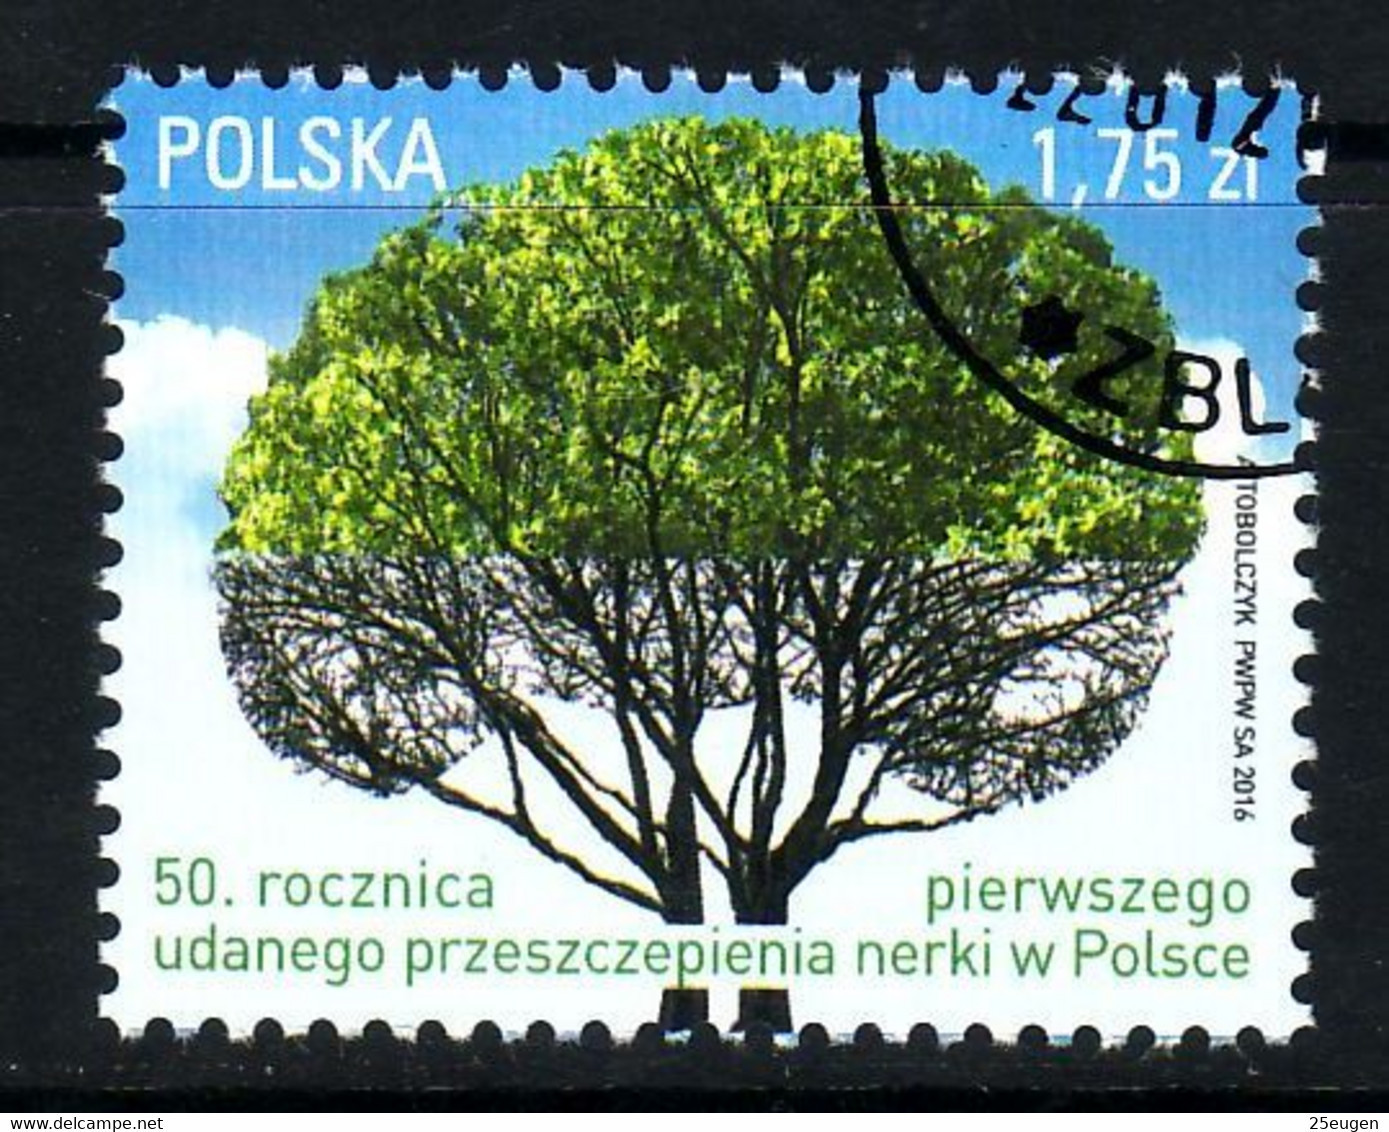 POLAND 2016 Michel No 4818 Used - Usados